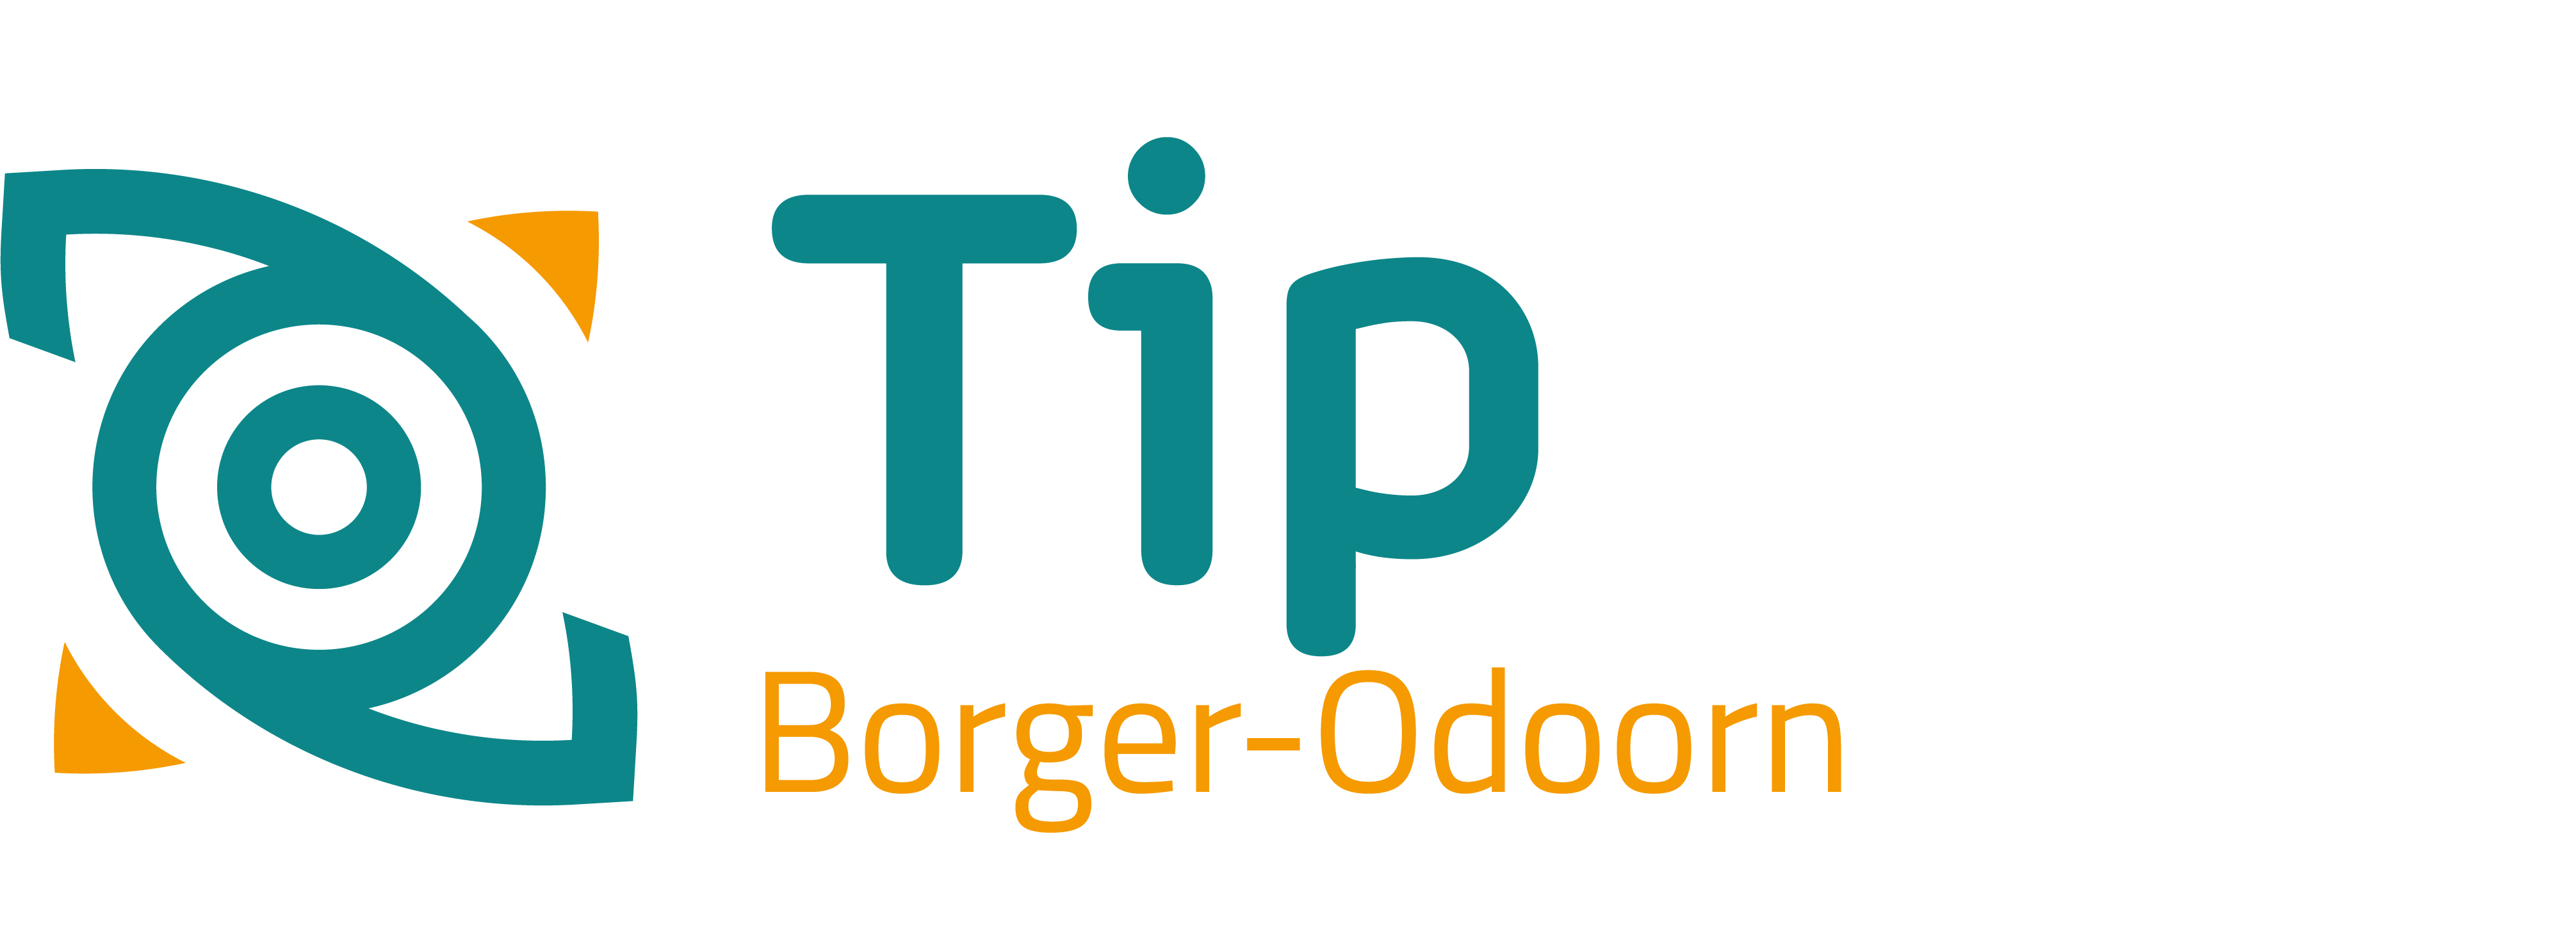 TipBorger-Odoorn